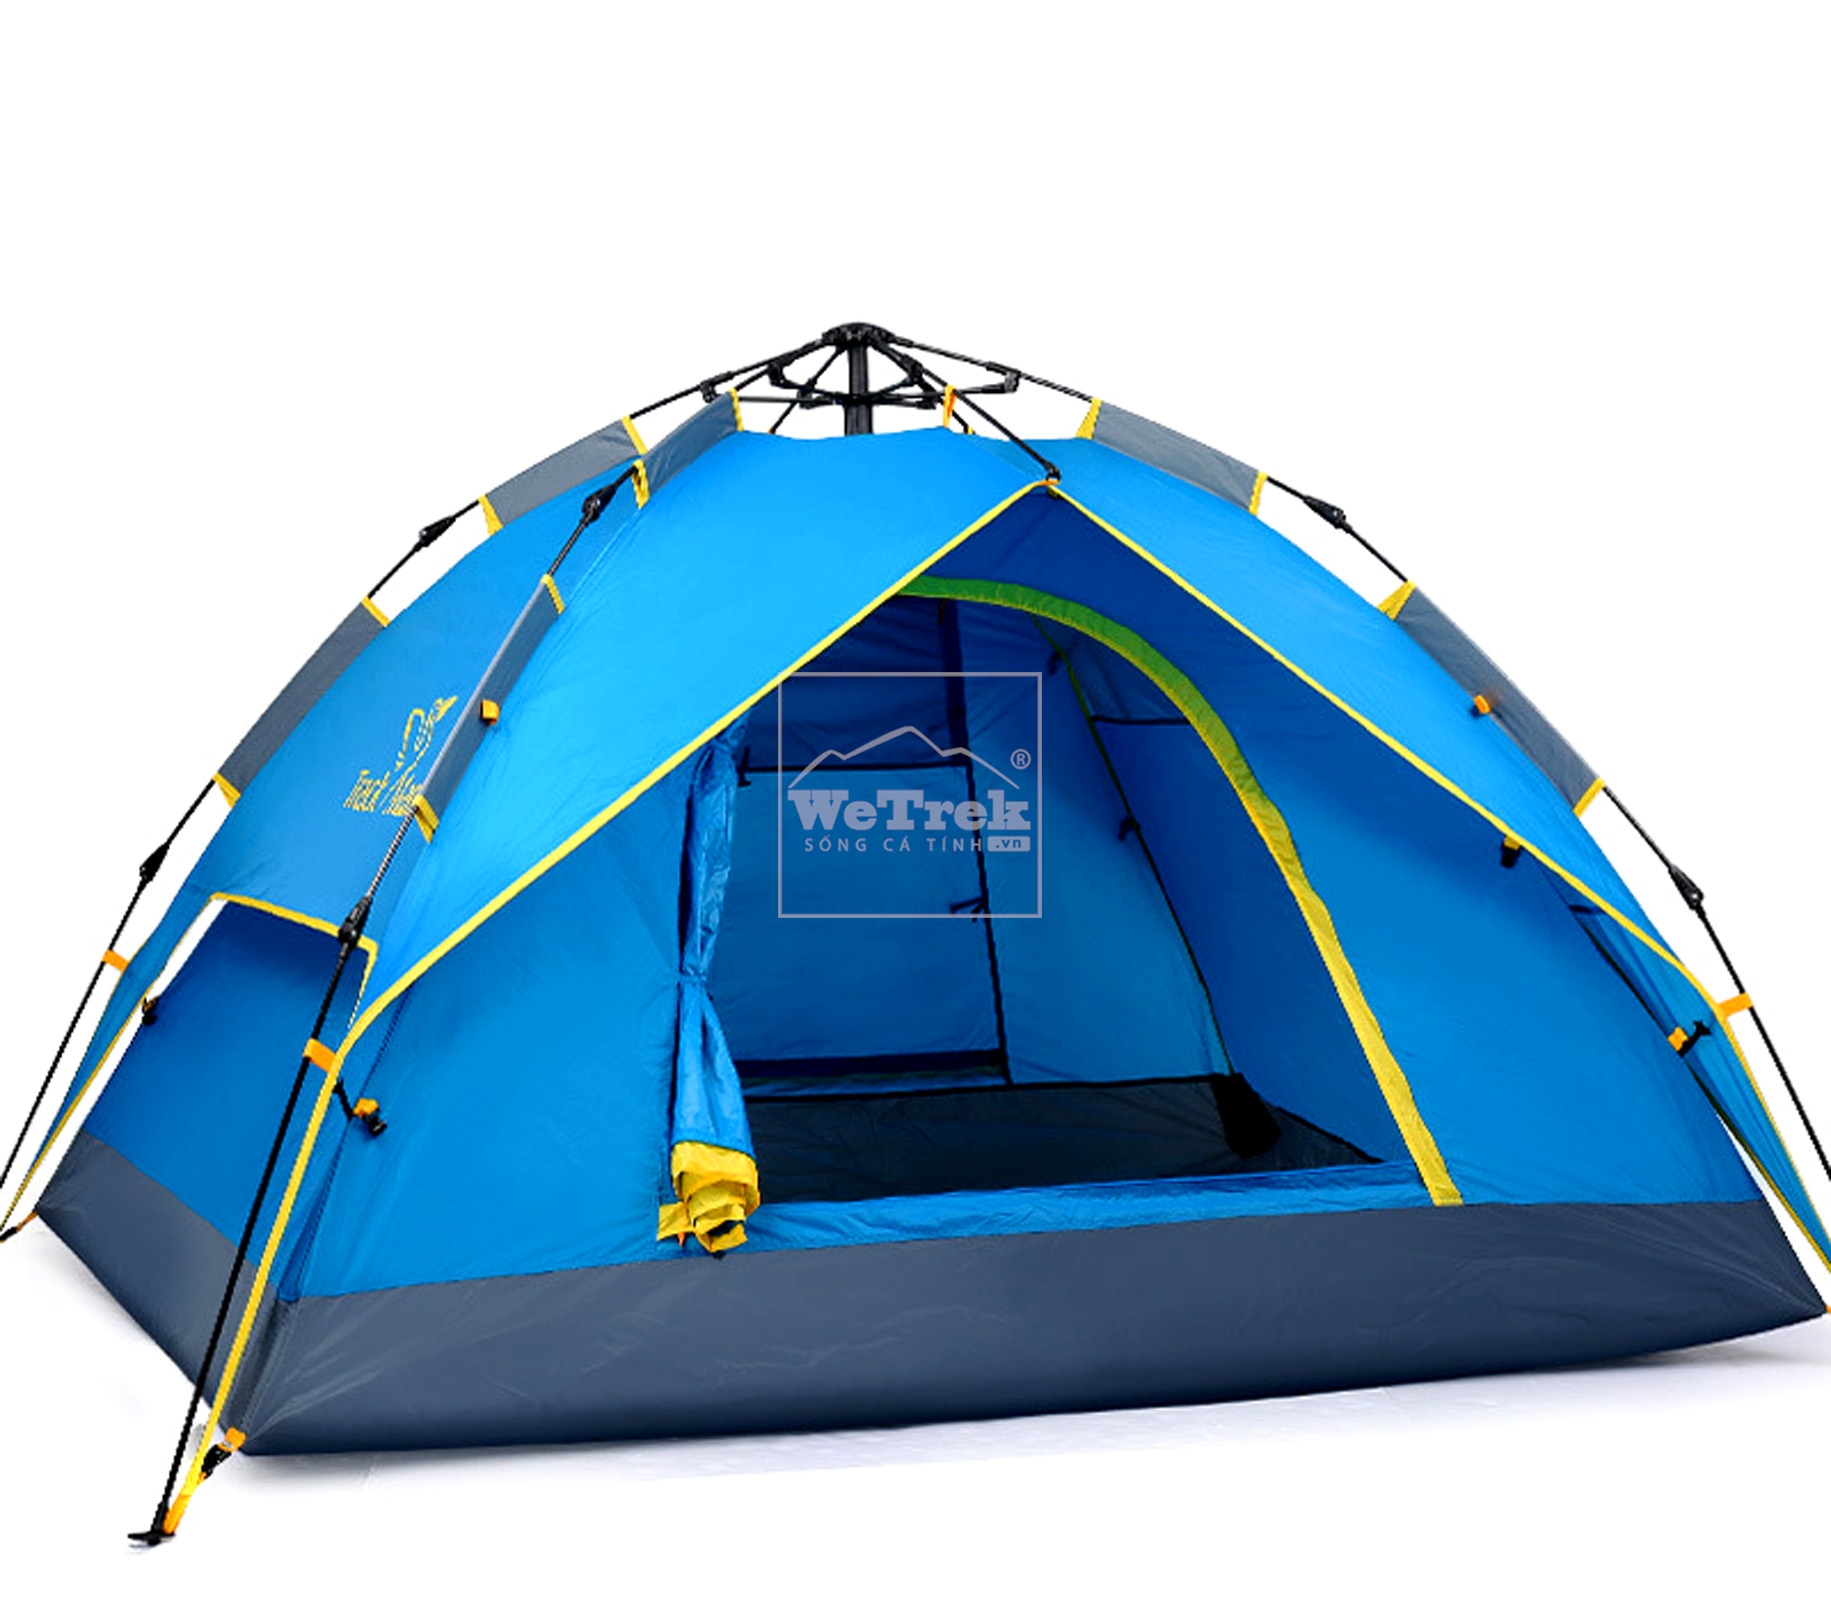 Палатки зонтичного типа. Automatic Tent палатка. Палатка Trackman. BC 143 Campinger 4х. Automatic Camping Tent for 3 4 people.